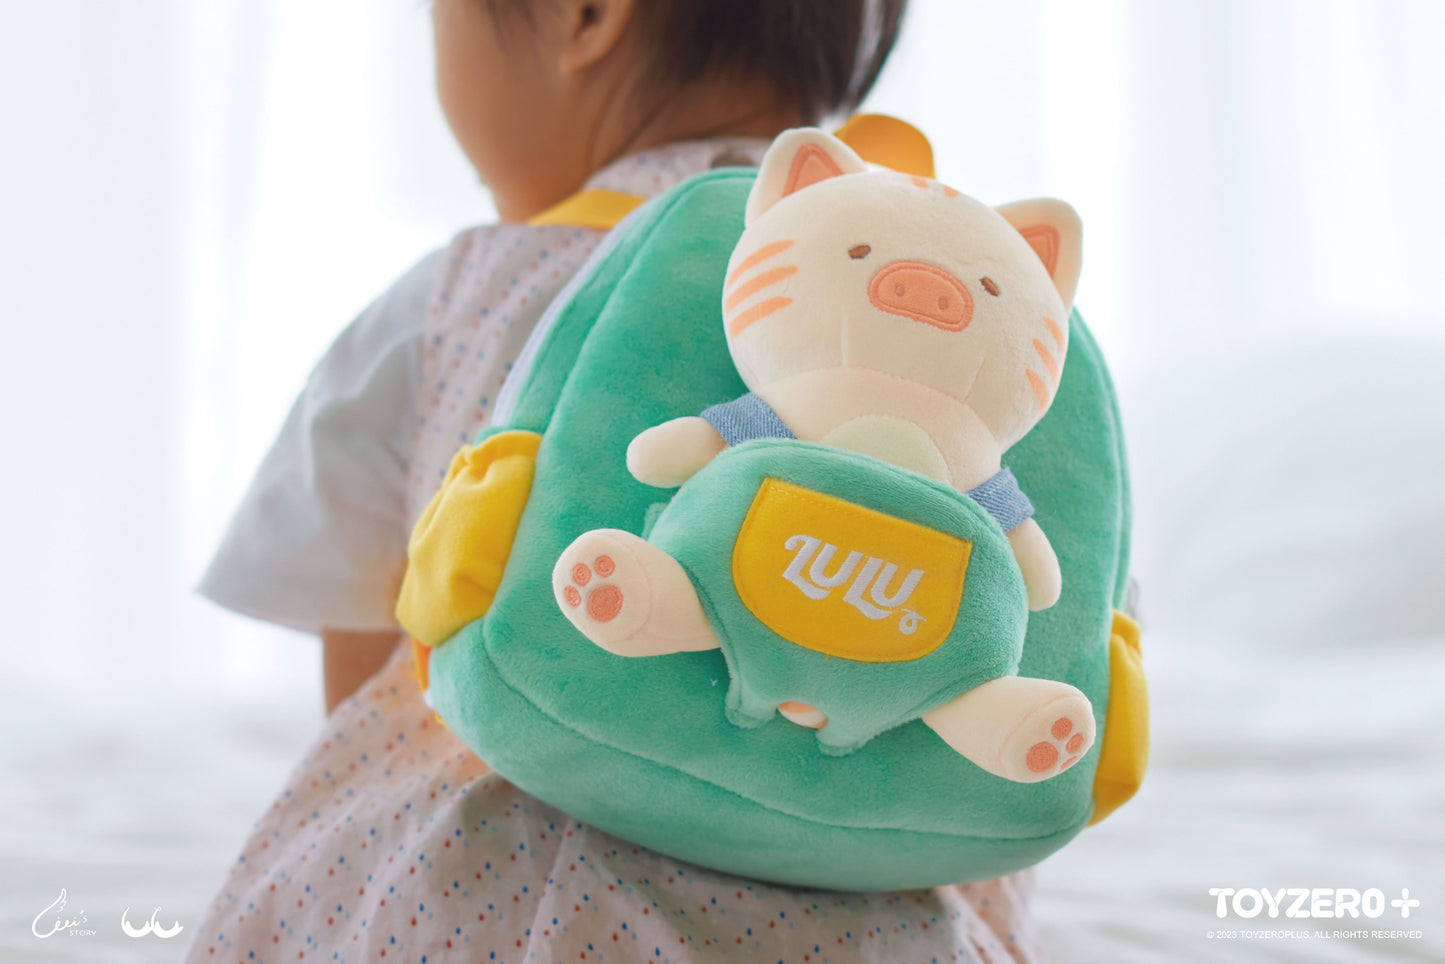 LuLu the Piggy find Your Way Travel with Kitty Backpack 罐頭豬LuLu 旅行系列 - 帶著豬咪看世界 背包